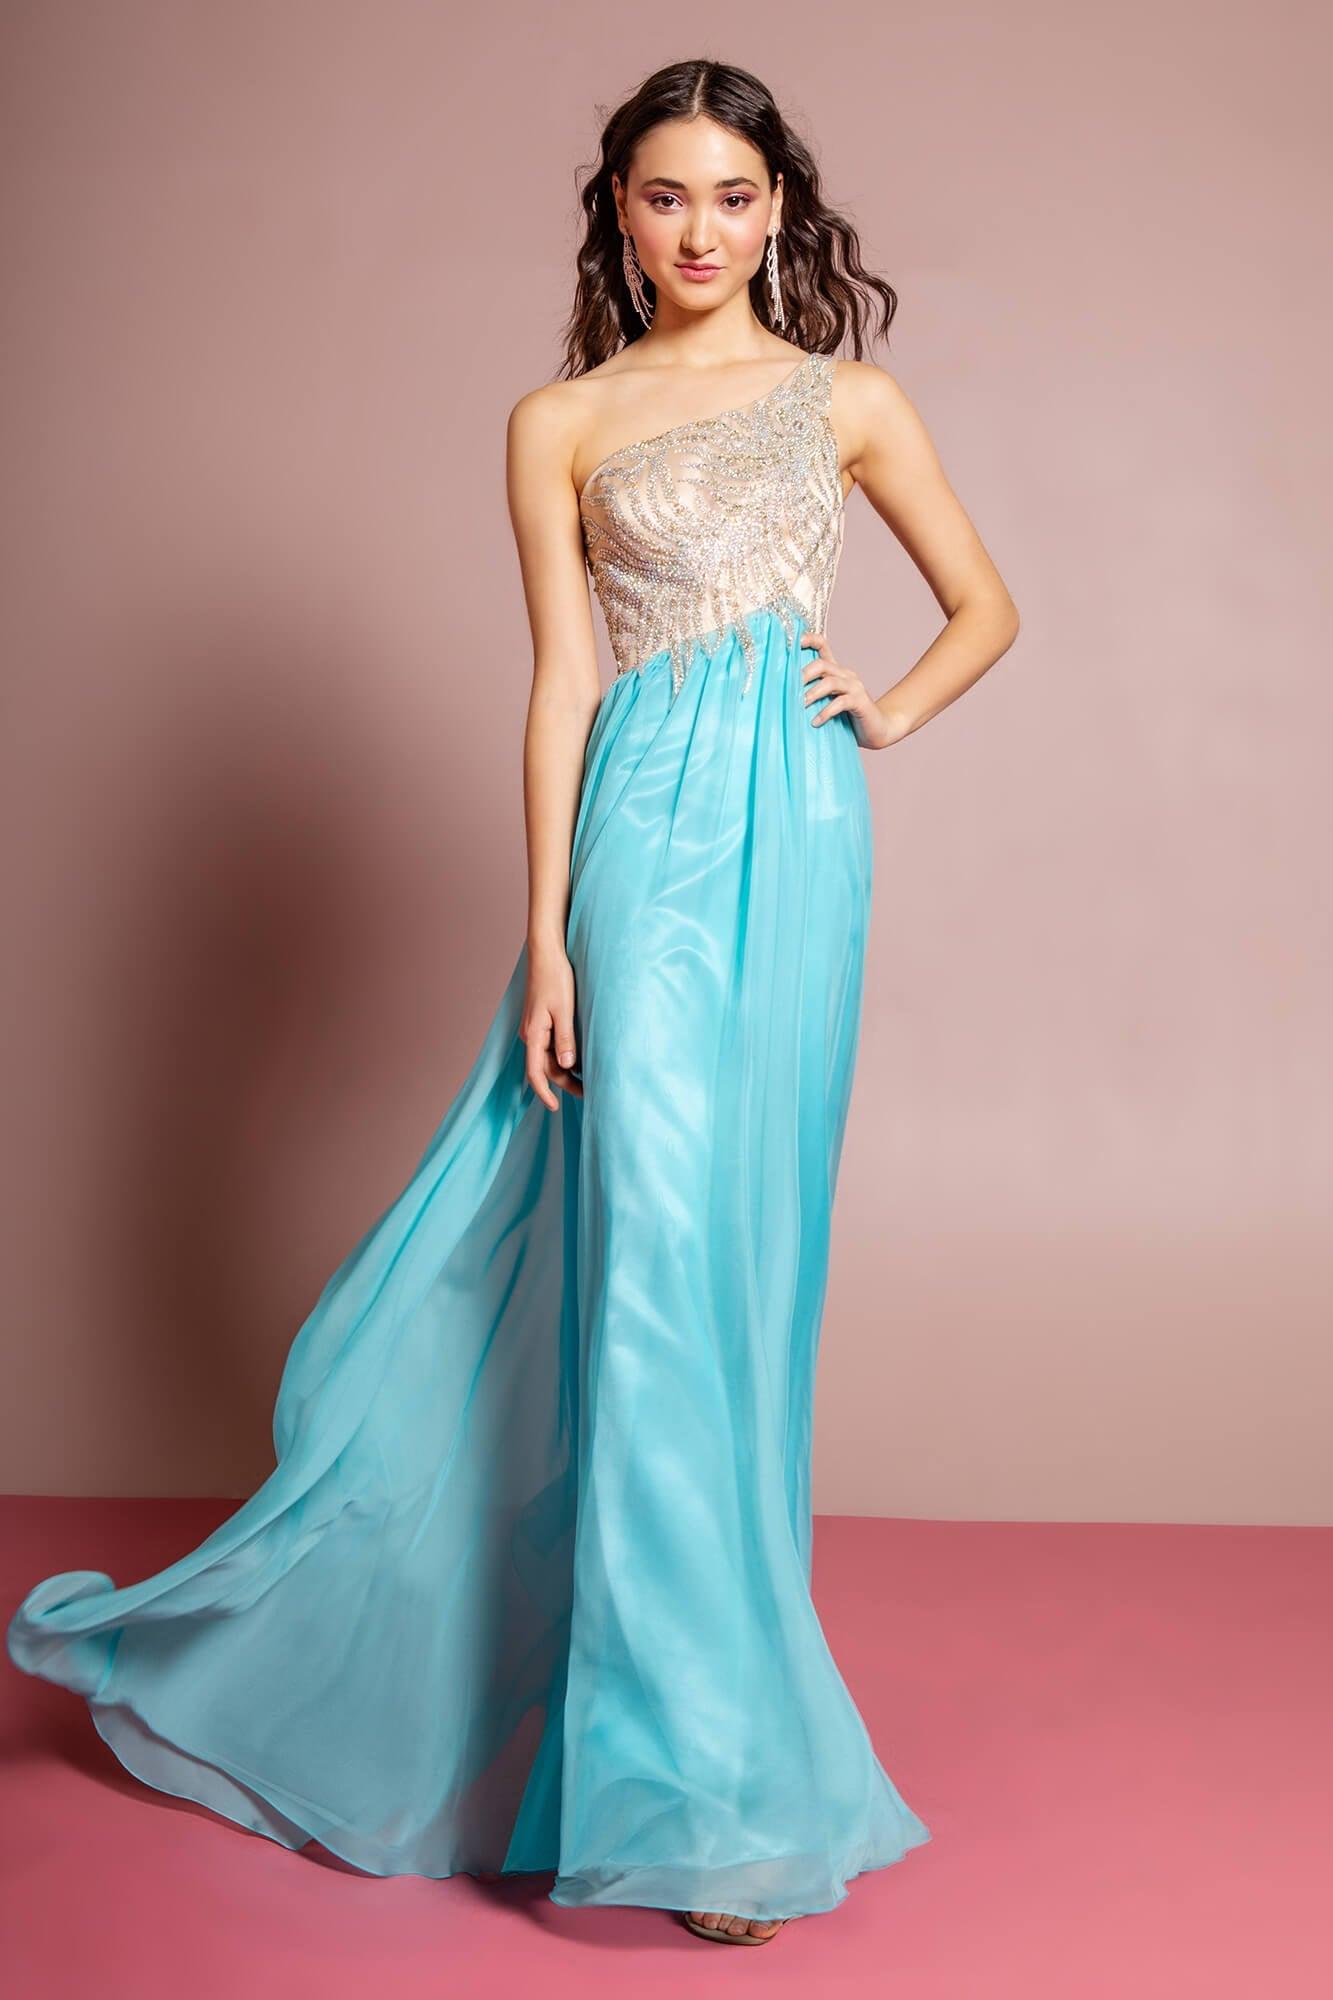 Prom Long Dress One Shoulder Chiffon Gown - The Dress Outlet Elizabeth K